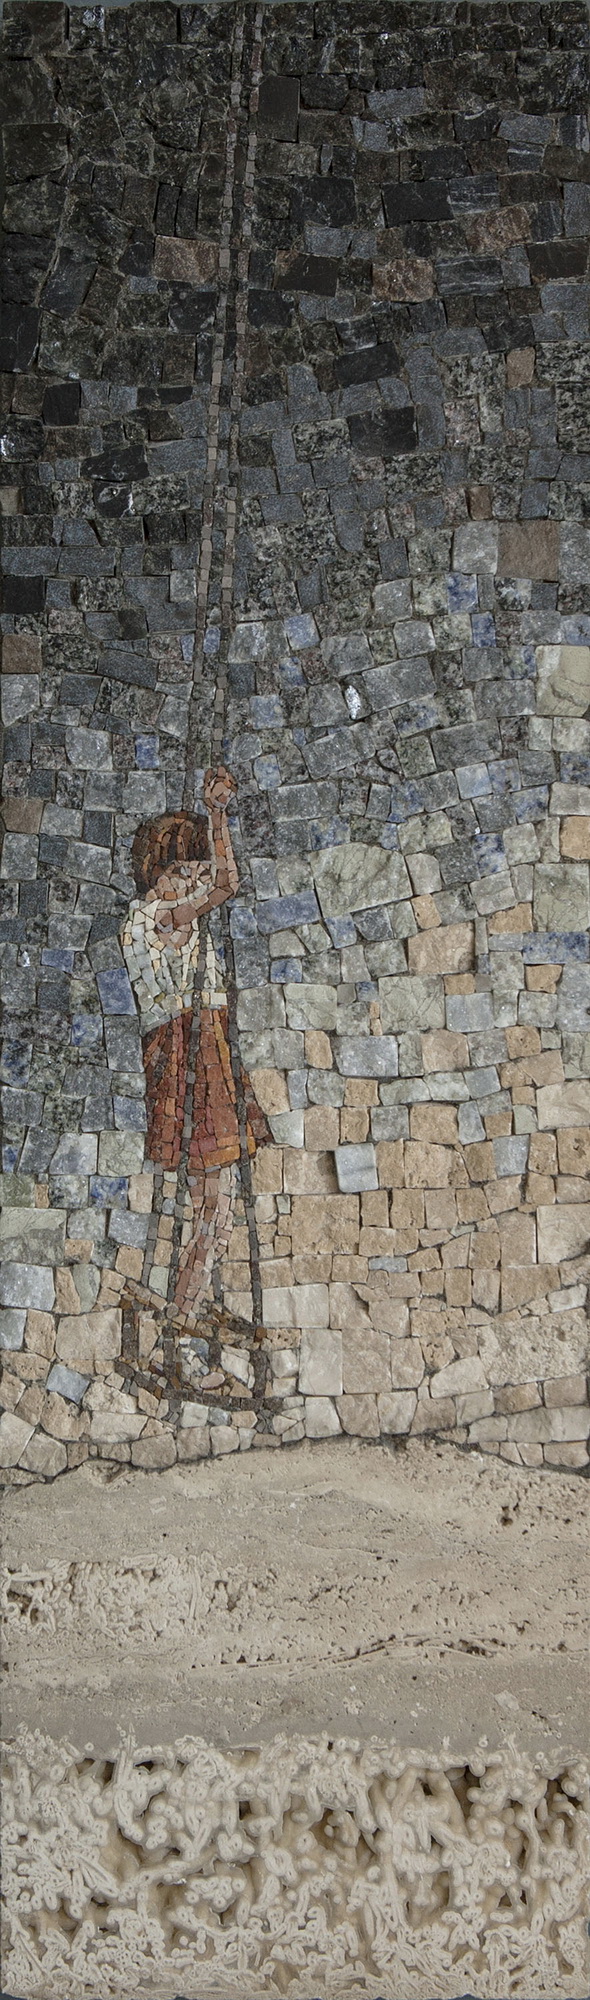 NEMOJ DA SLOMIS VRAT, mozaik,18X61,2013_resize